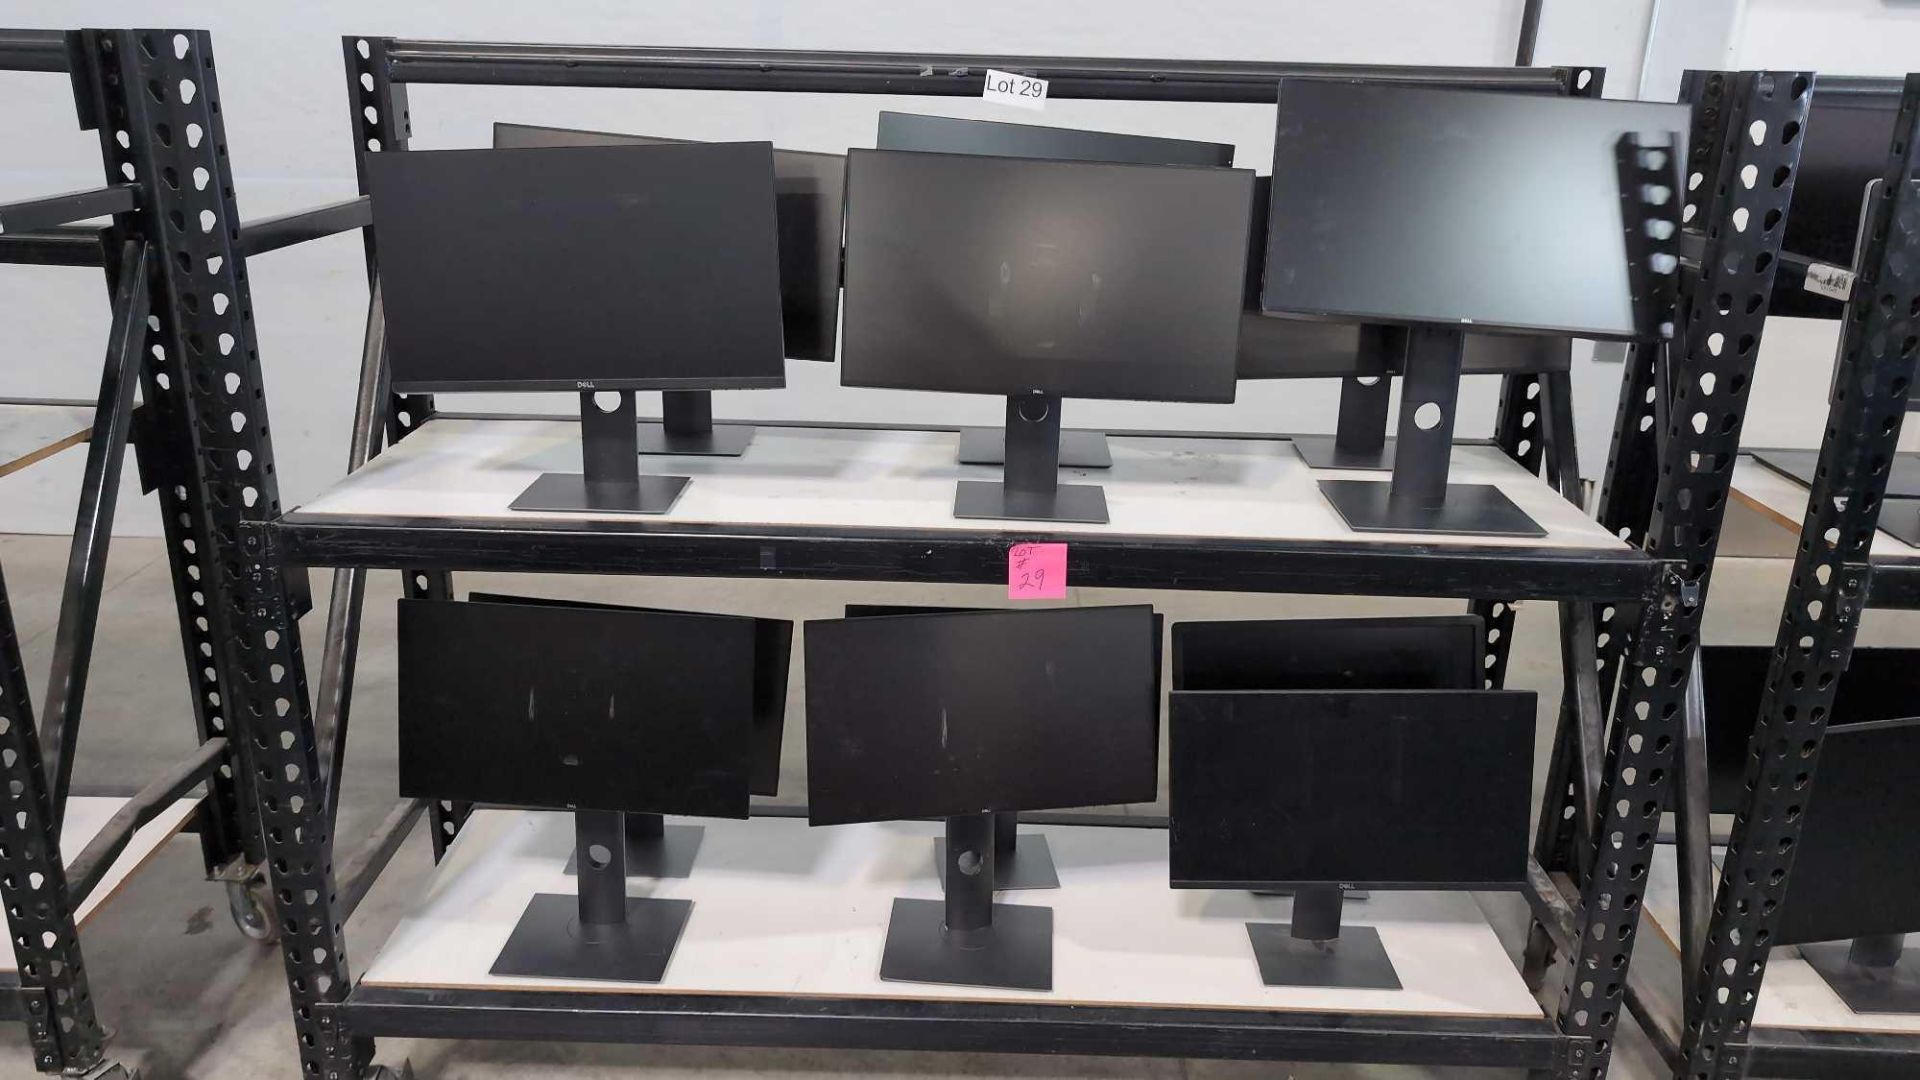 12 Dell Computer Monitors